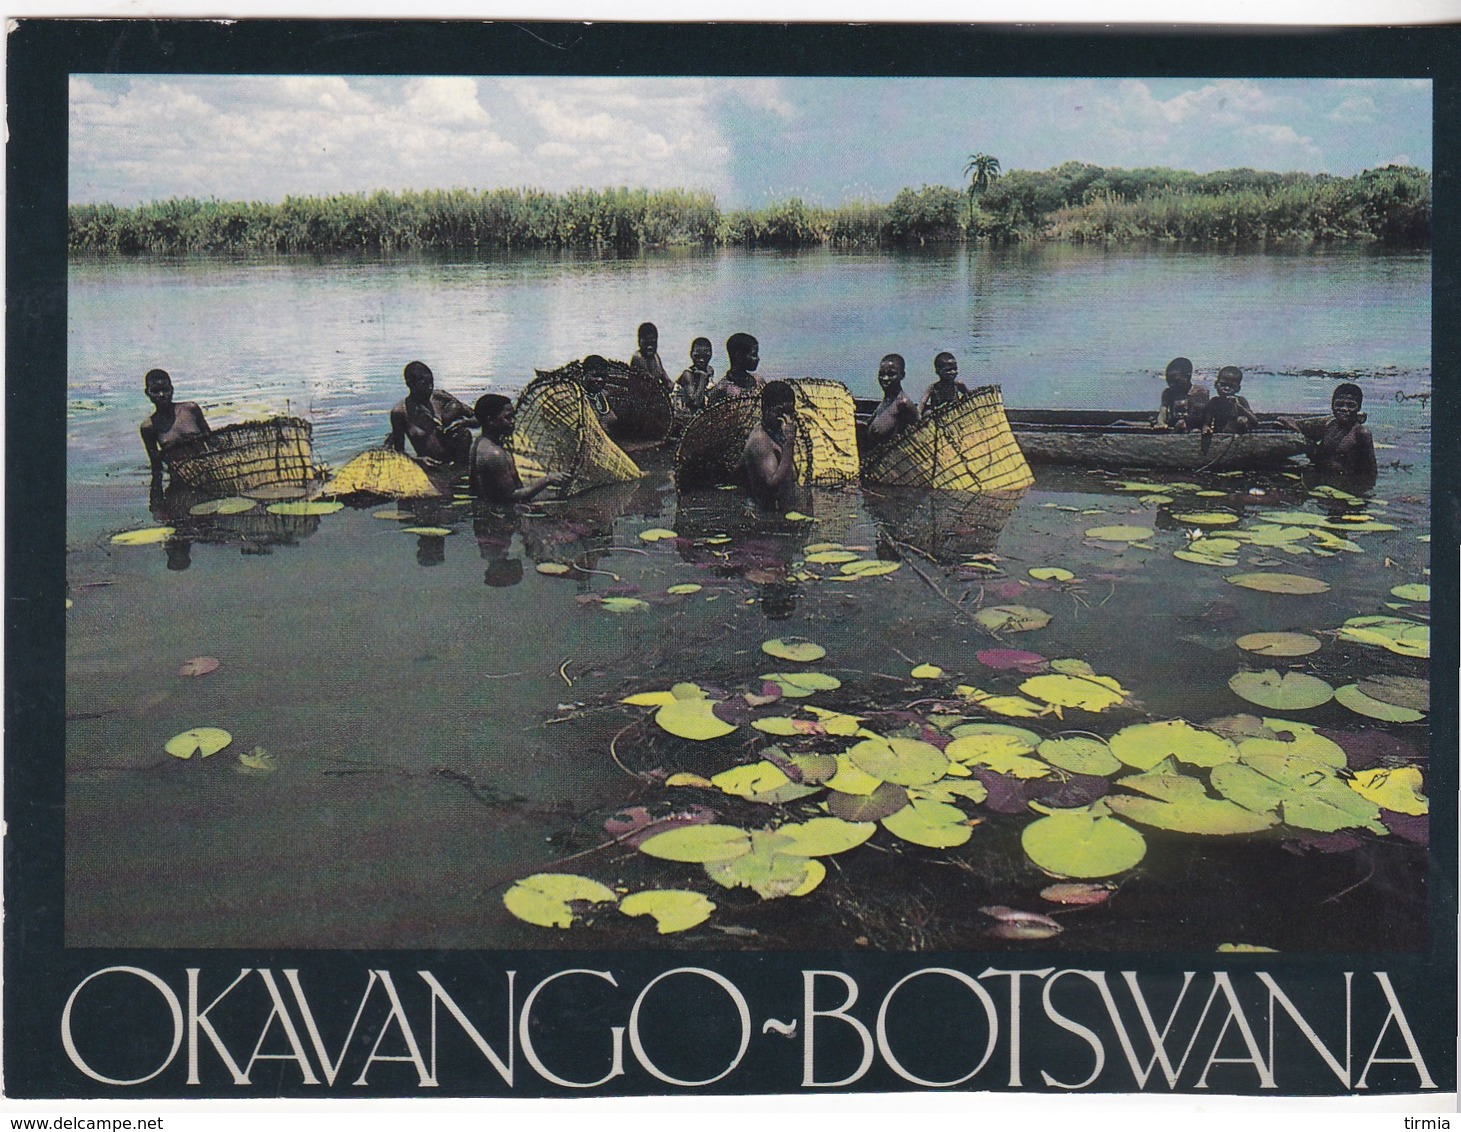 Okavango-Botswana - Photography Anthony Bannister - Botswana